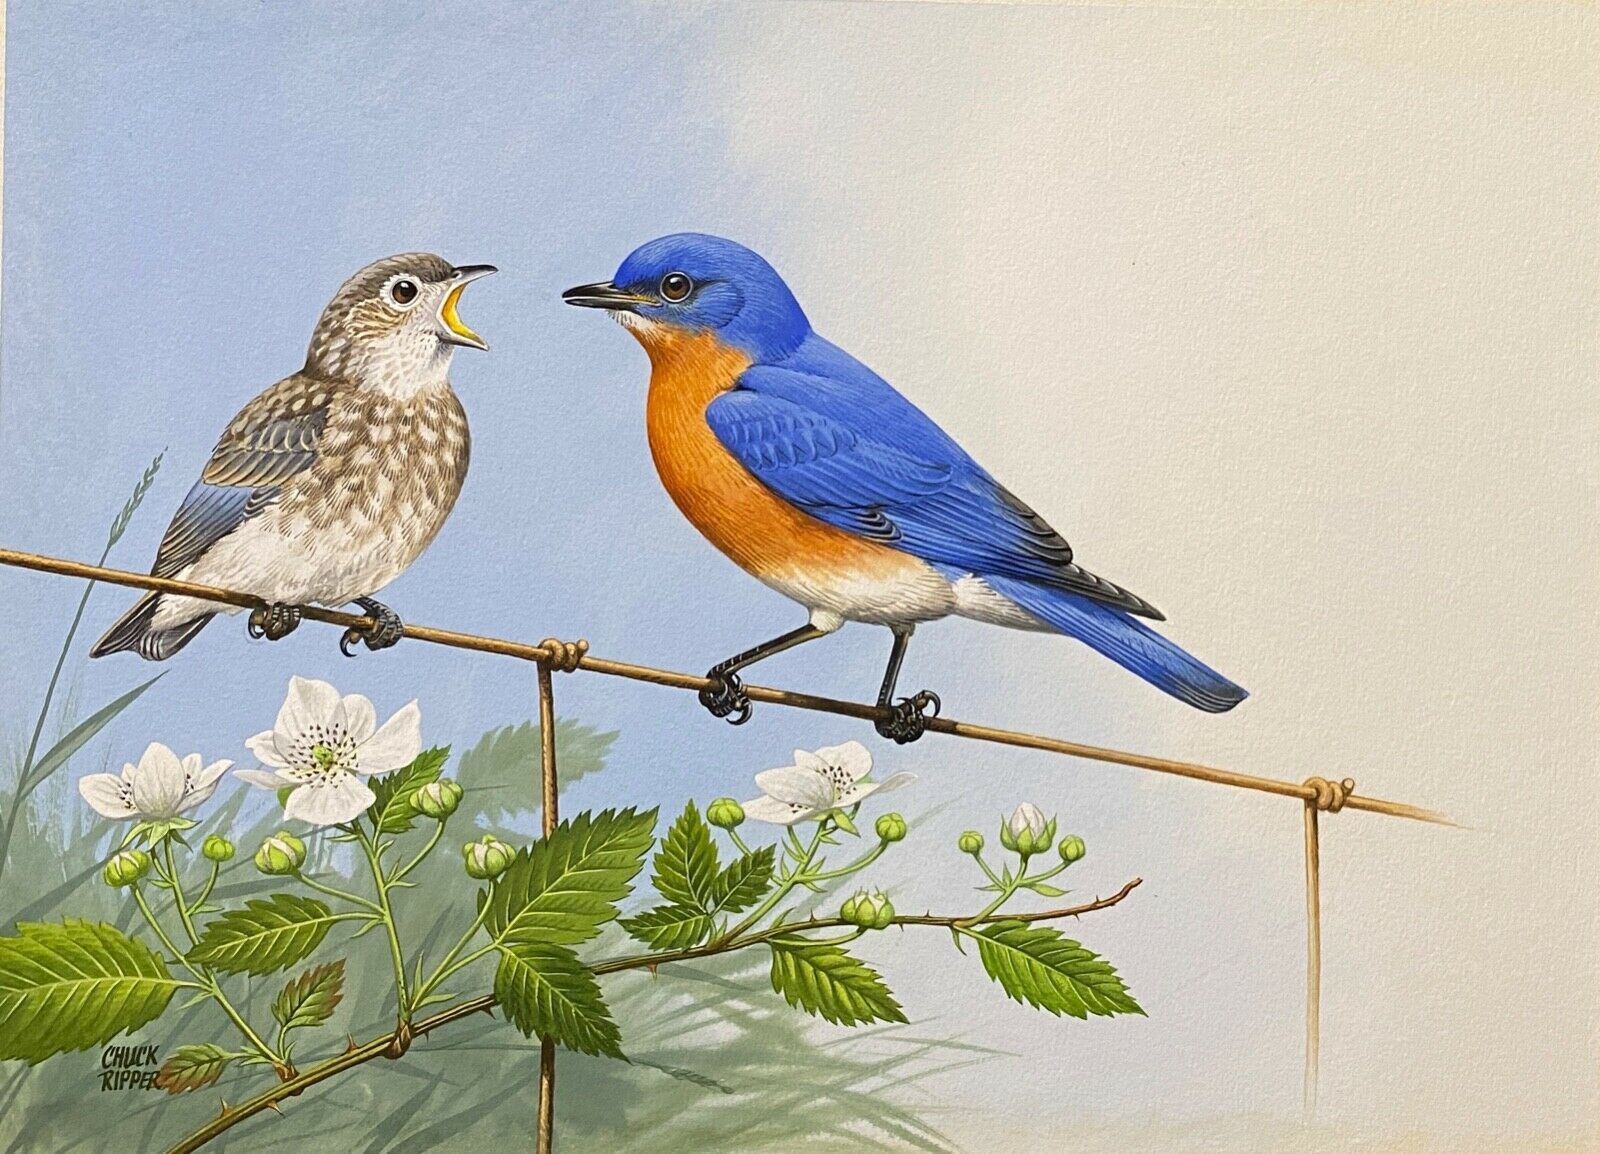 Orig. Bird Art Painting - Bluebird by Chuck Ripper, Signed, Framed, Watercolor